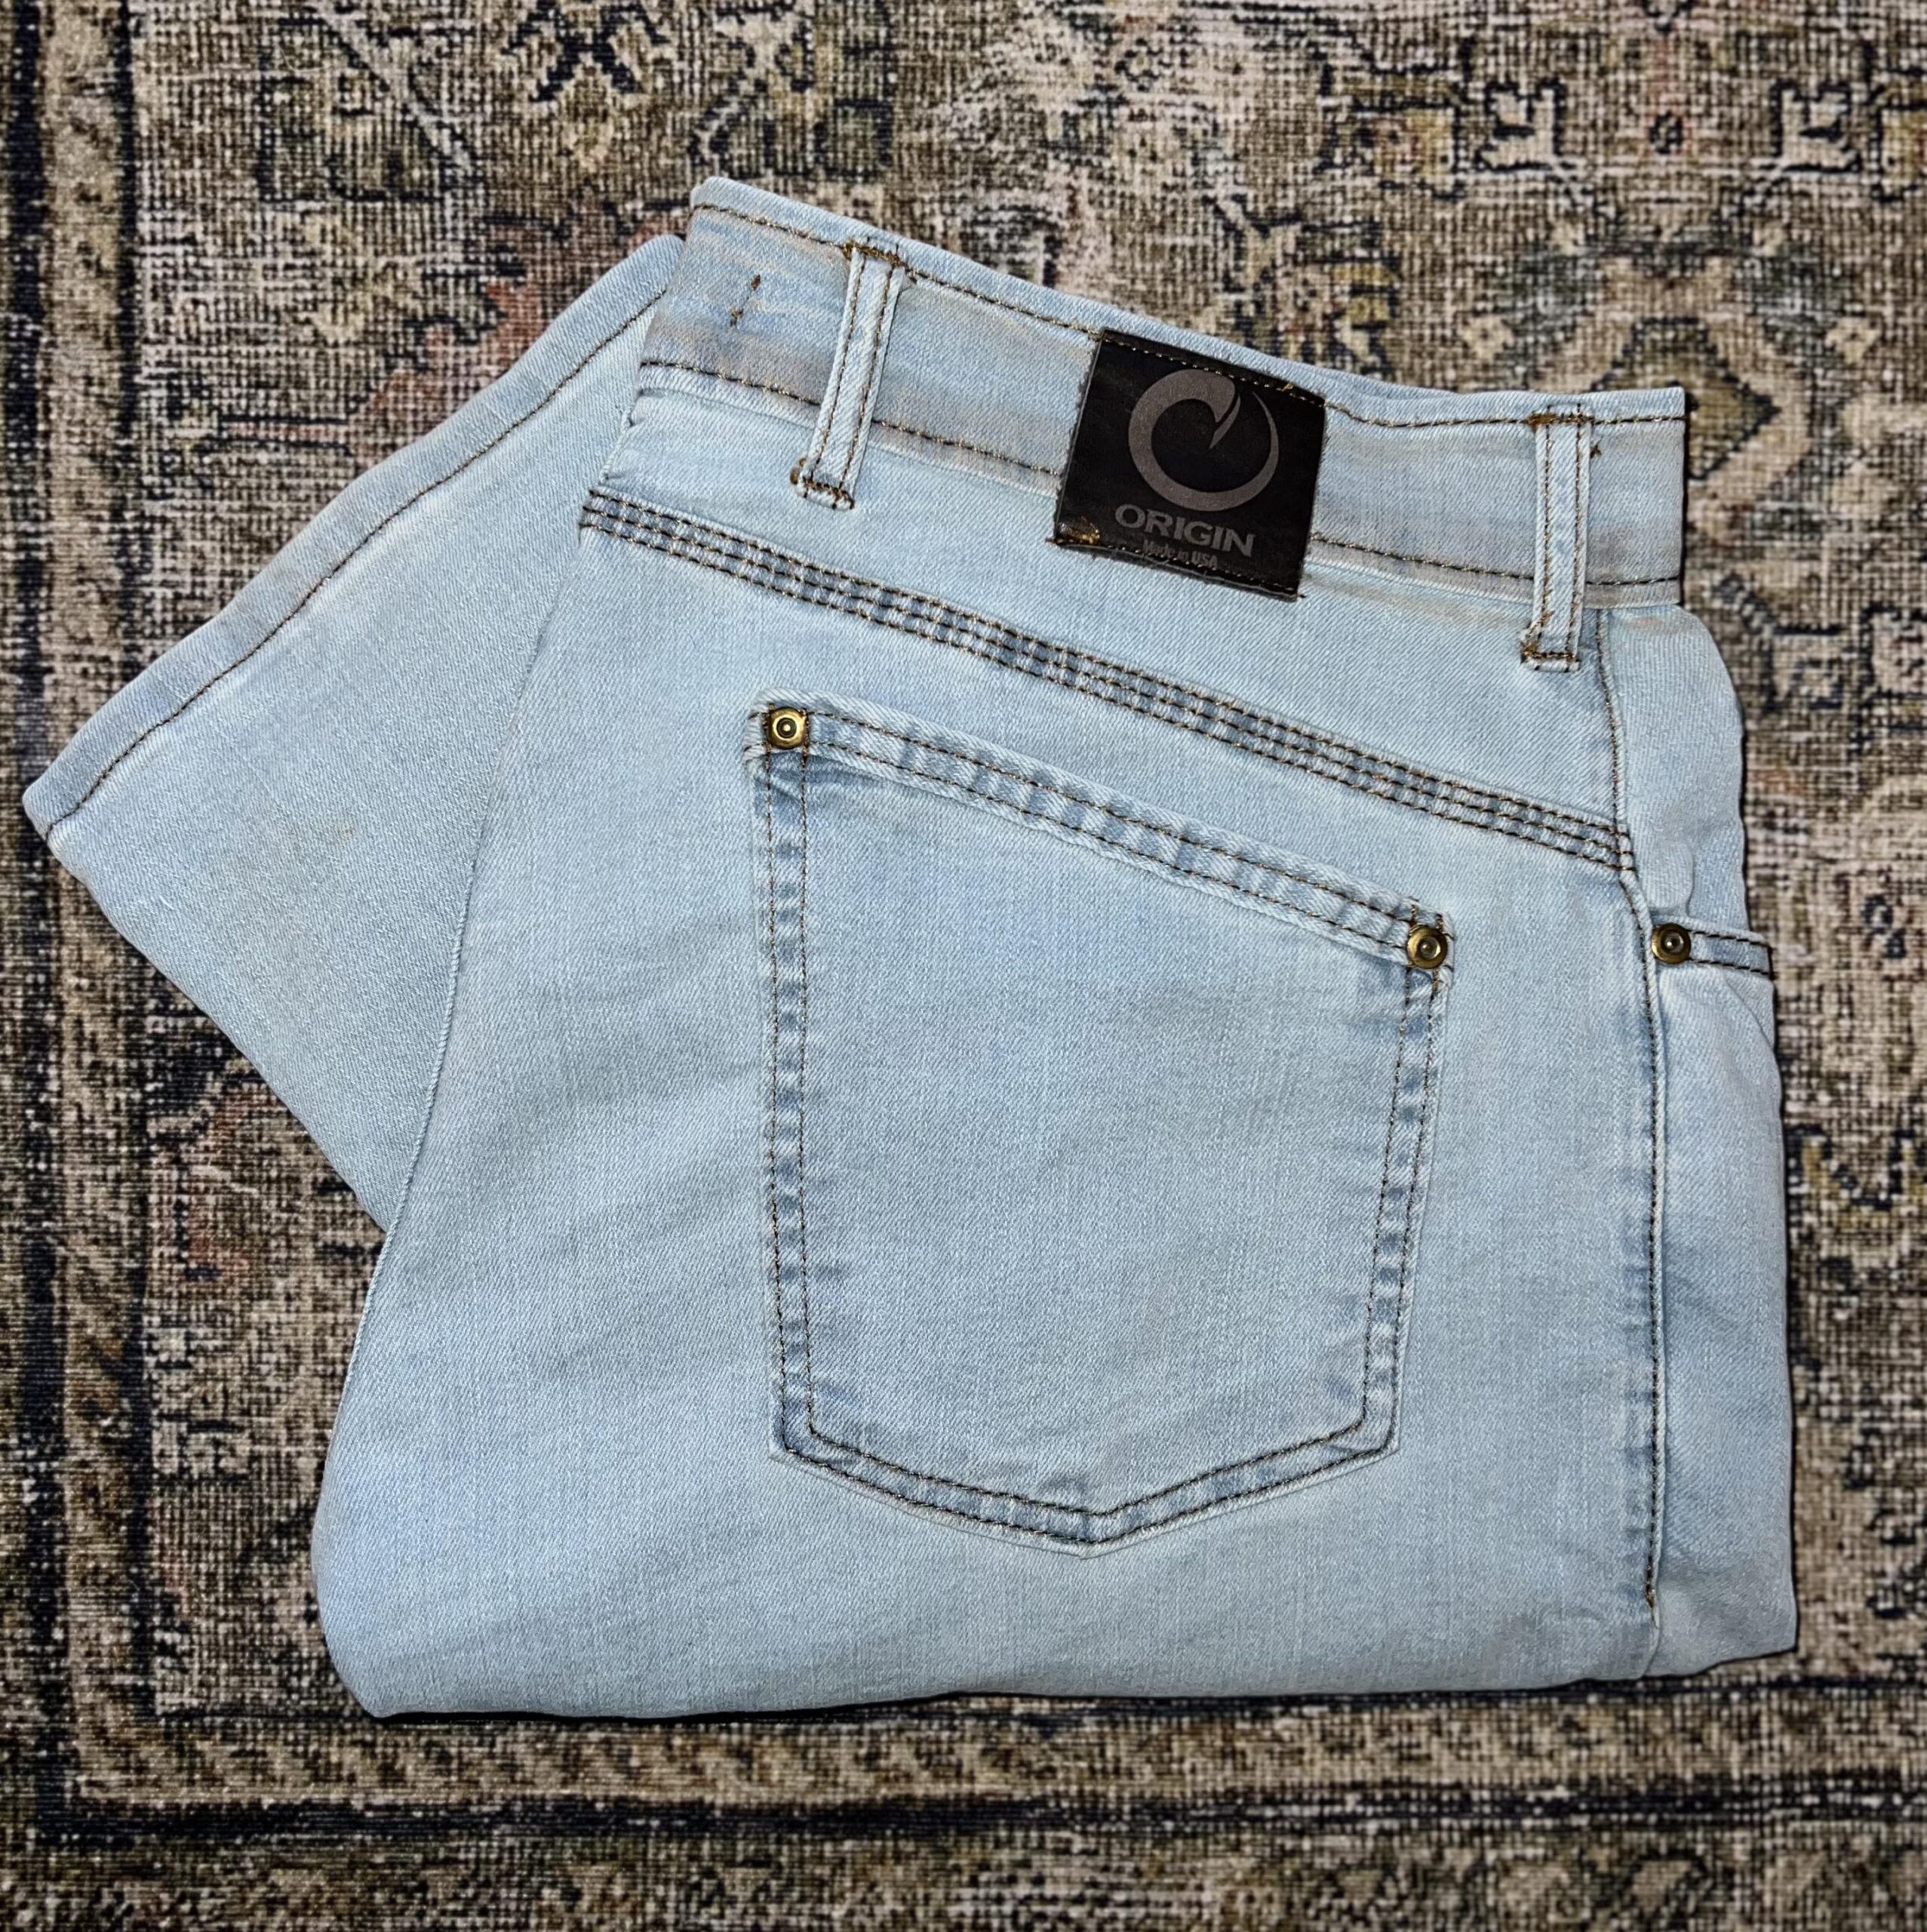 Origin Maine Delta Flex Jeans – An Honest Review